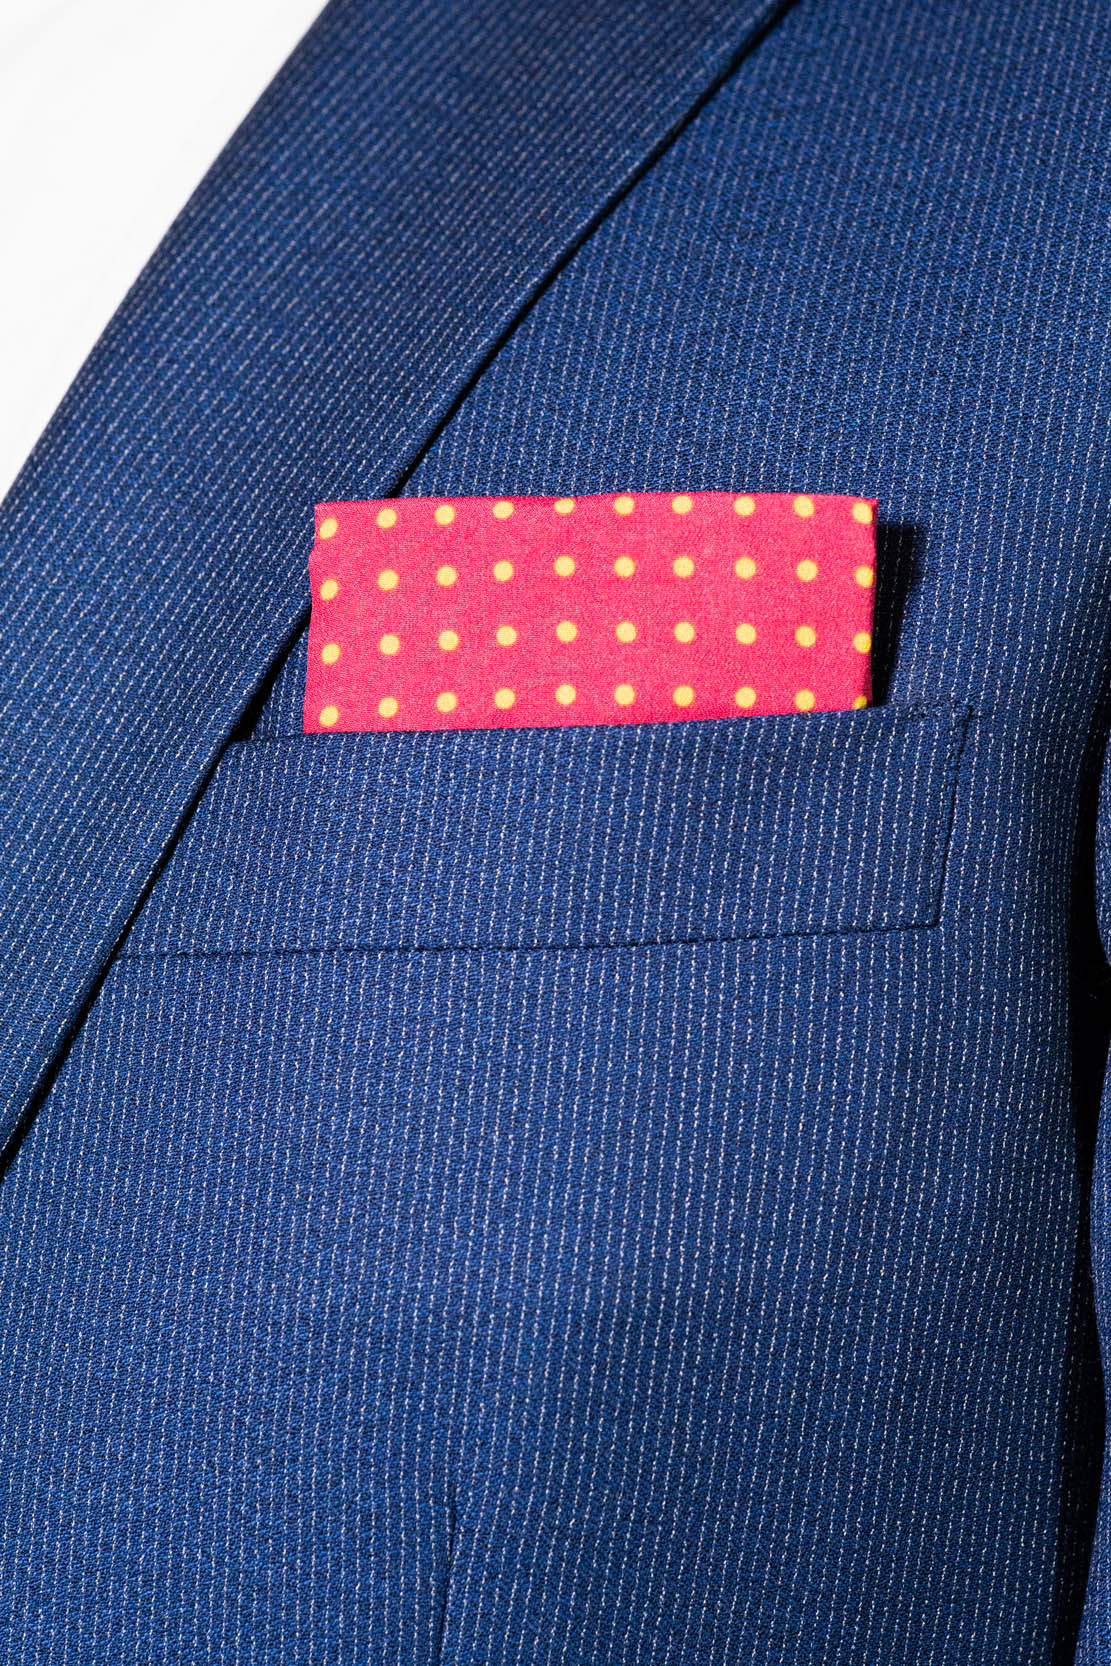 RARE CUT 's Merlot Dots Pocket Square Worn in a Suit Jacket